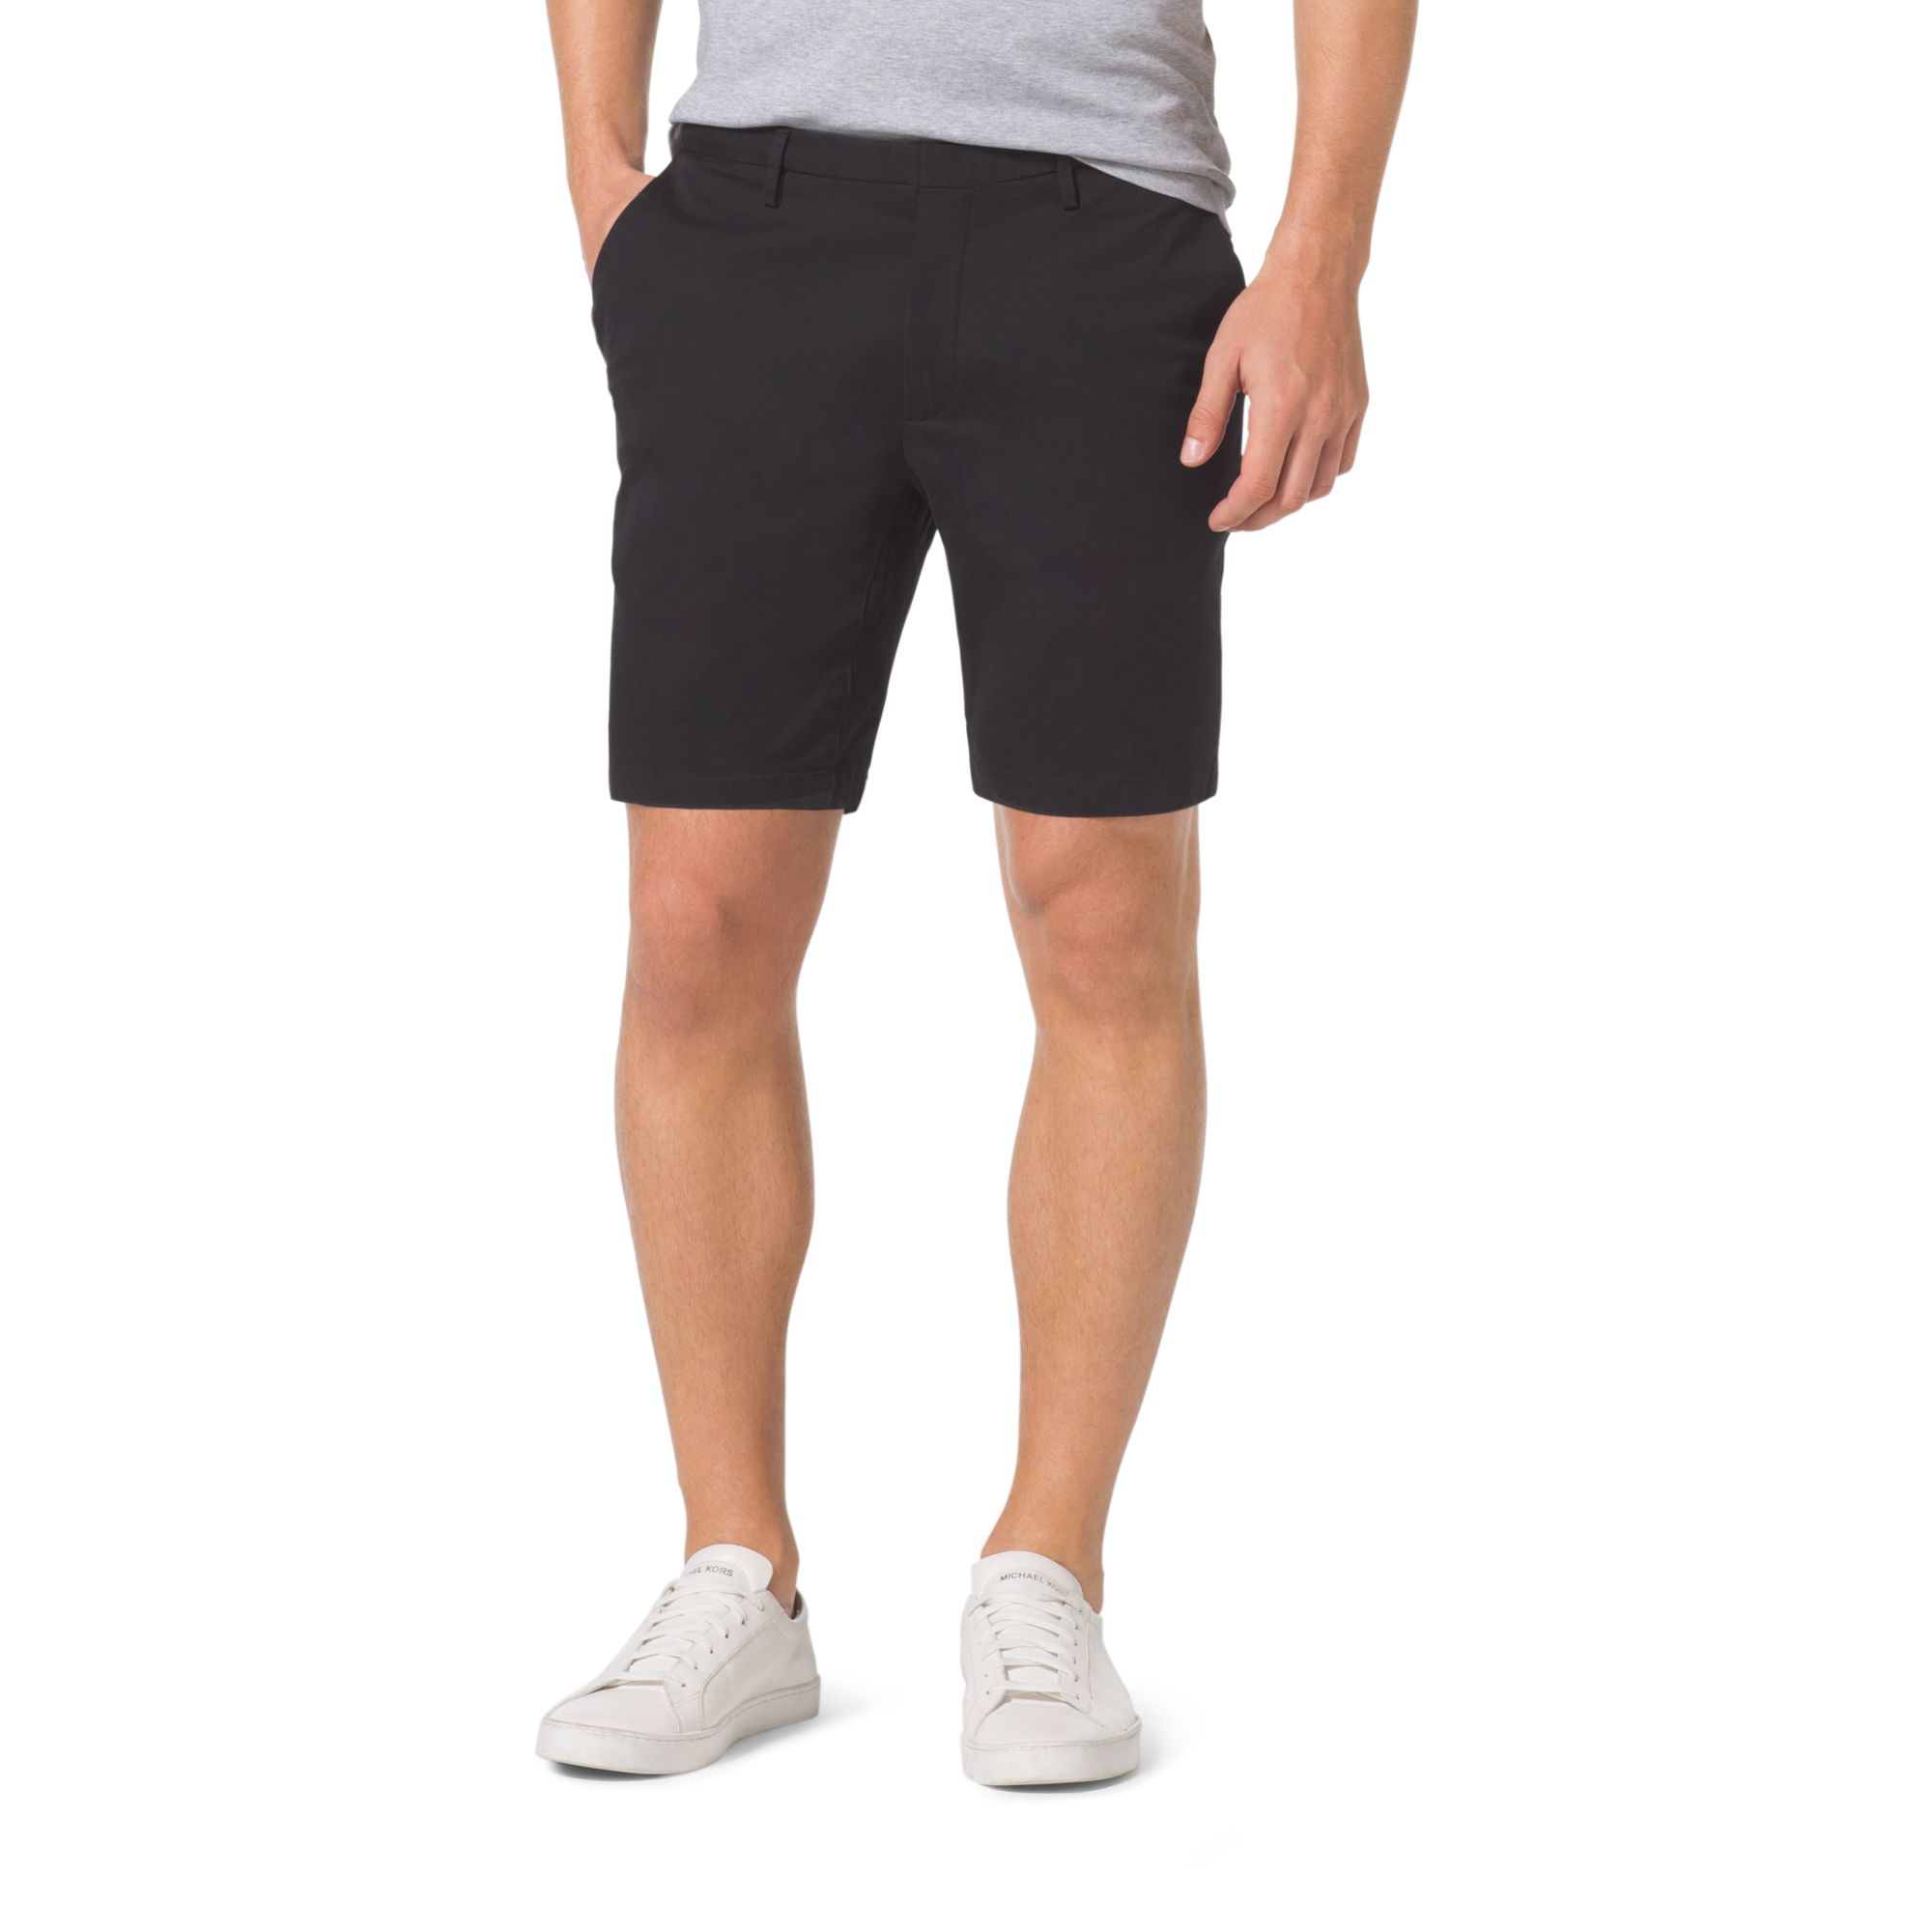 michael kors shorts men's